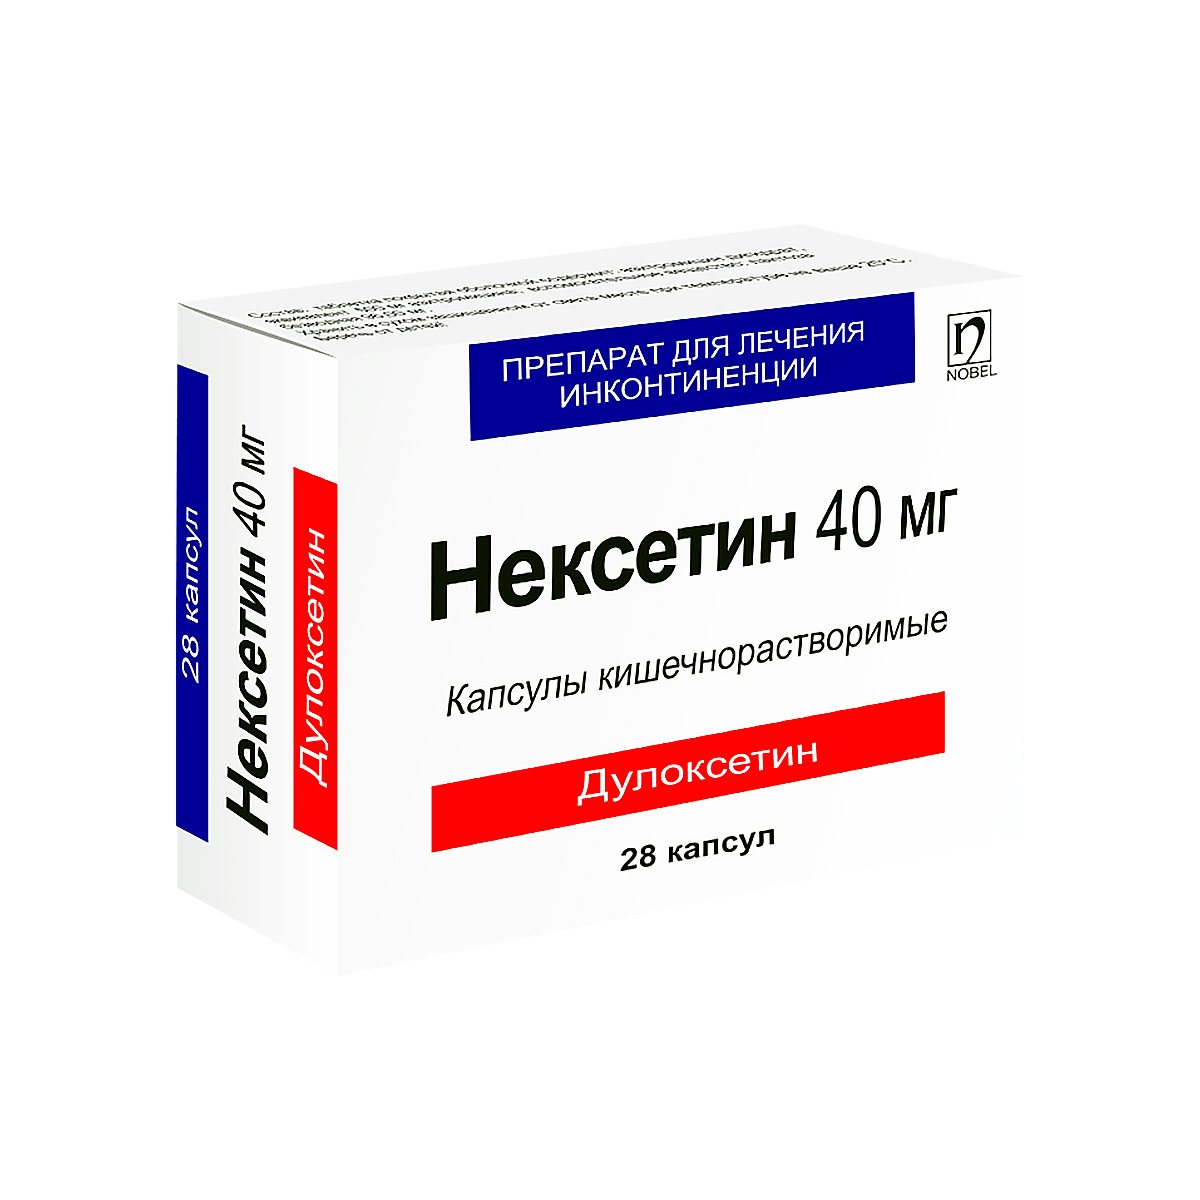 Нексетин 40 мг капсулы кишечнорастворимые 28 шт